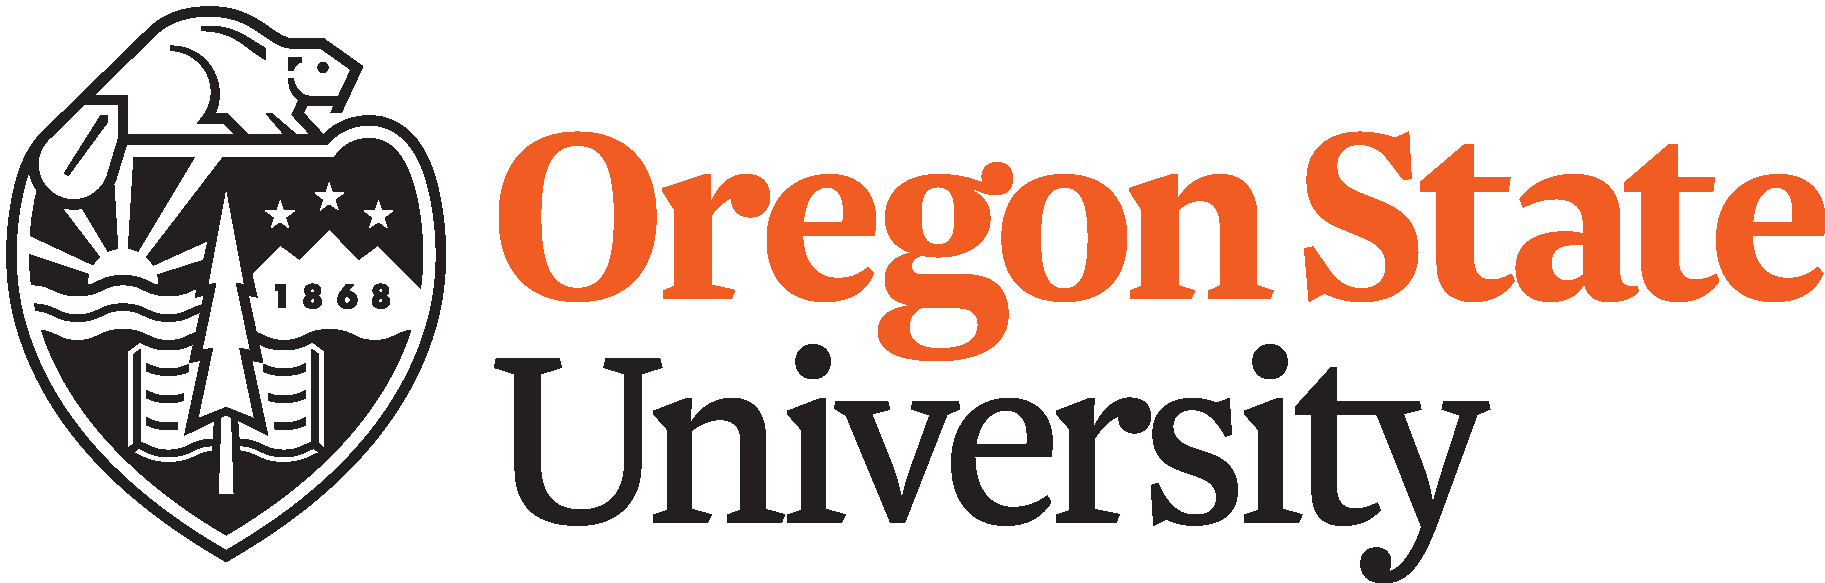 the logo for oregon state university